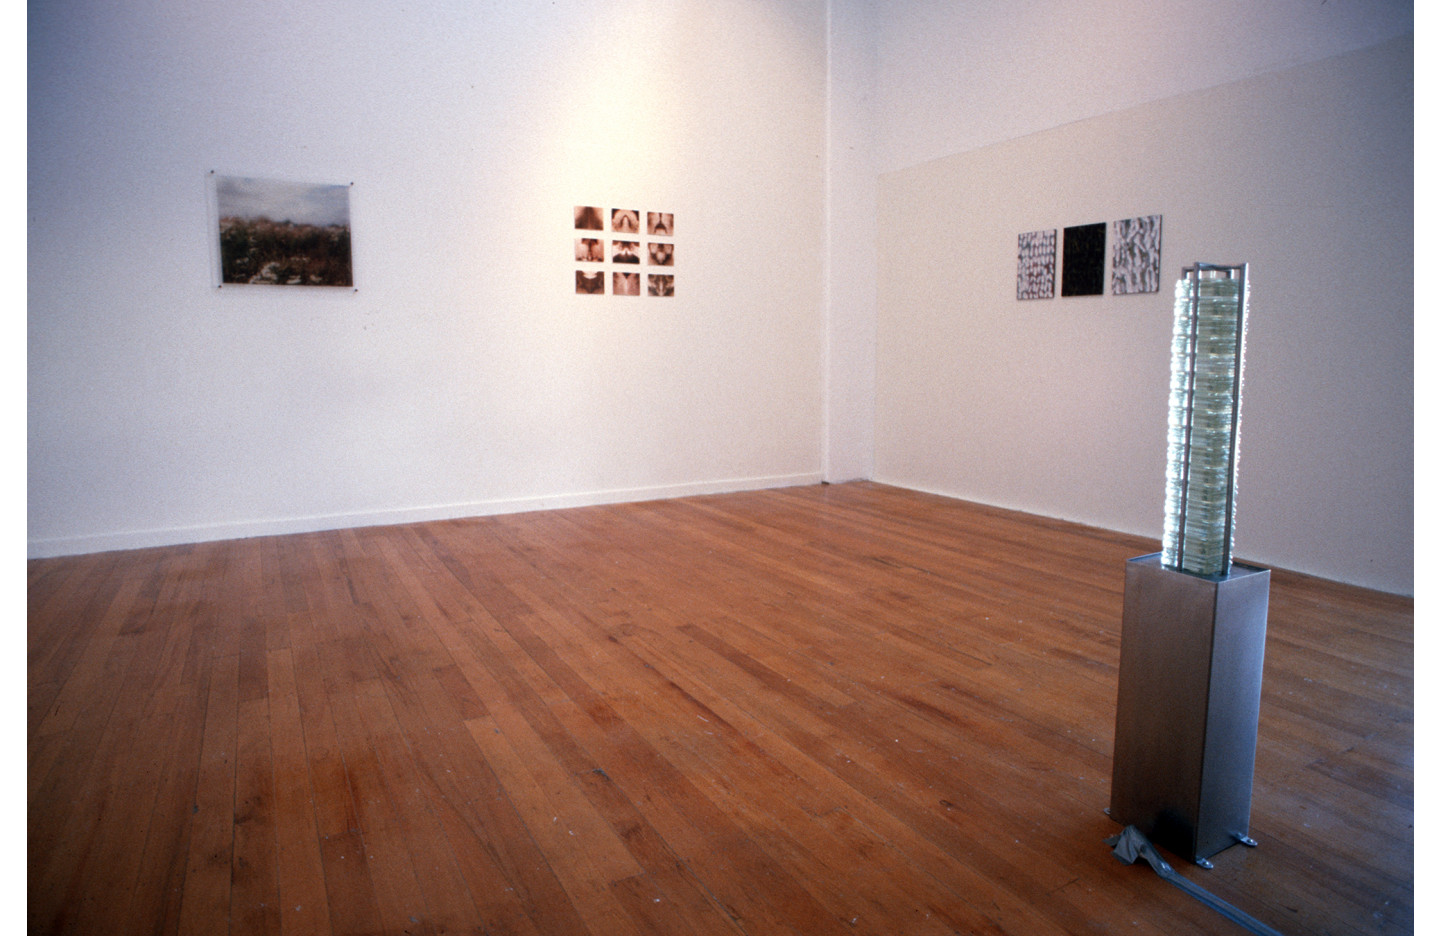 Results, Ramp Gallery (2000)